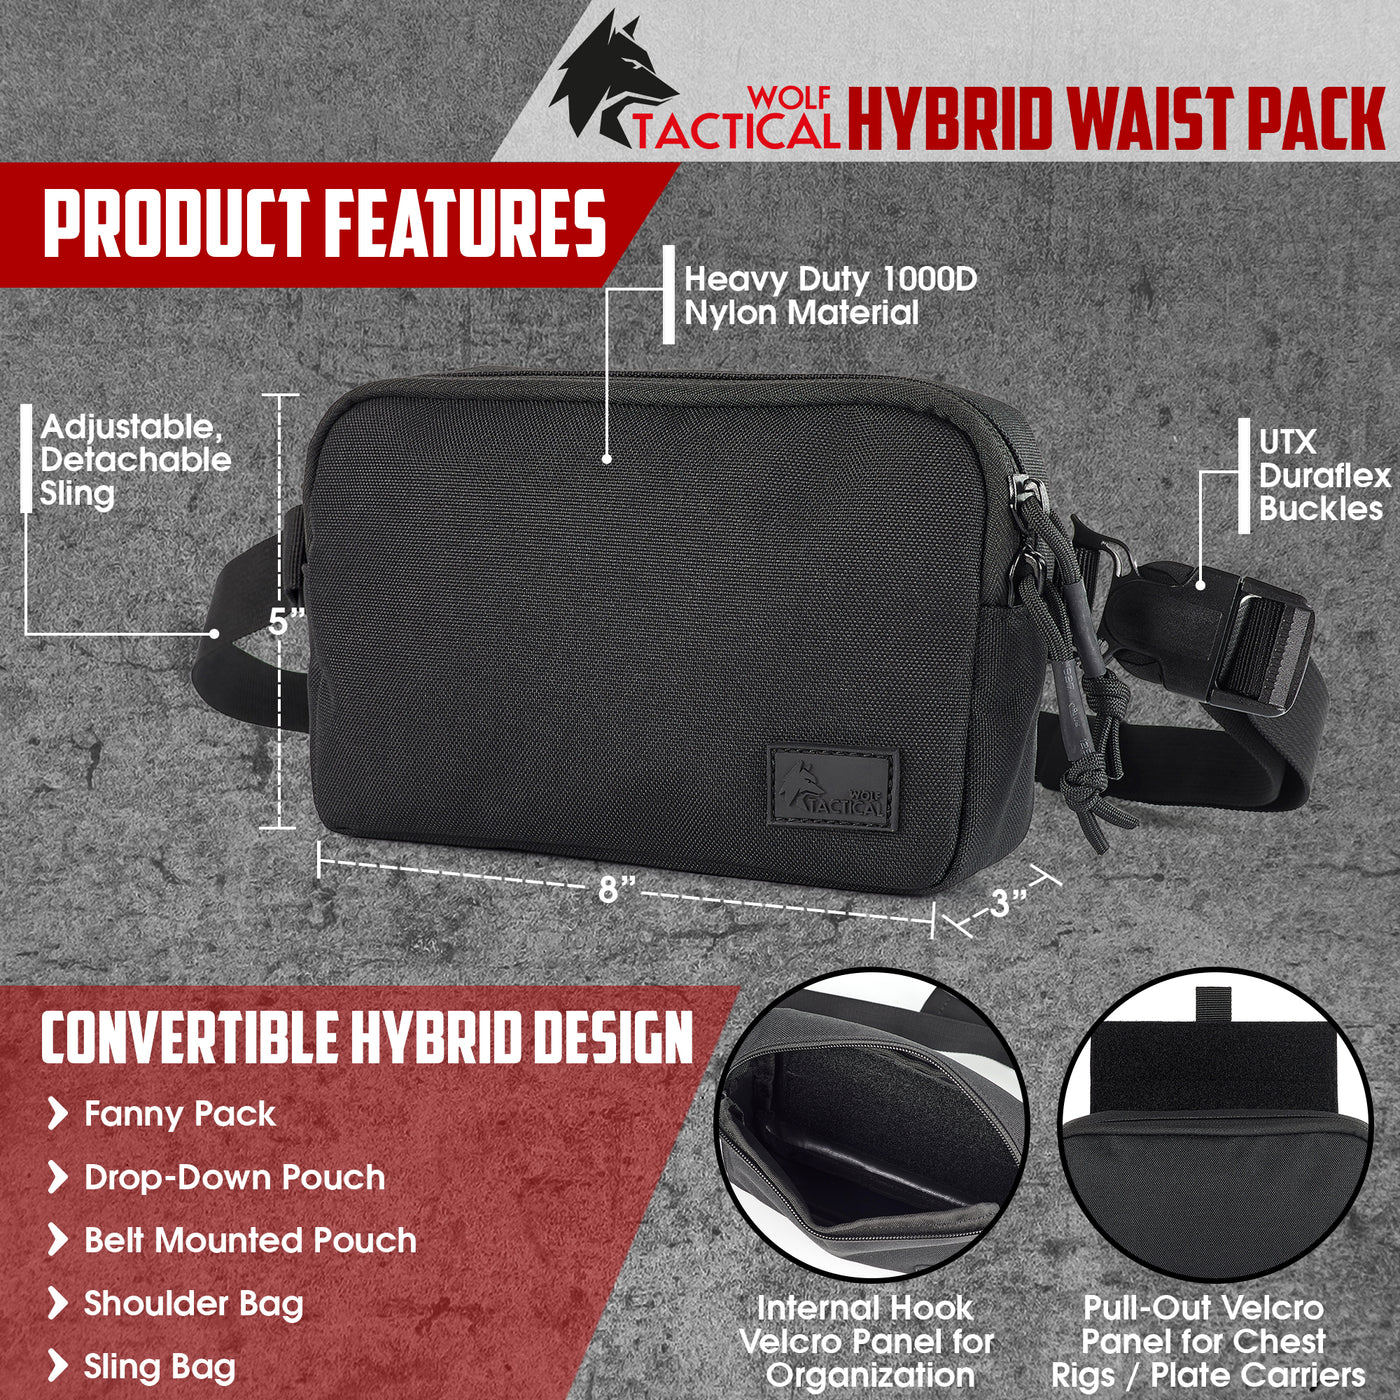 Hybrid Waist Pack